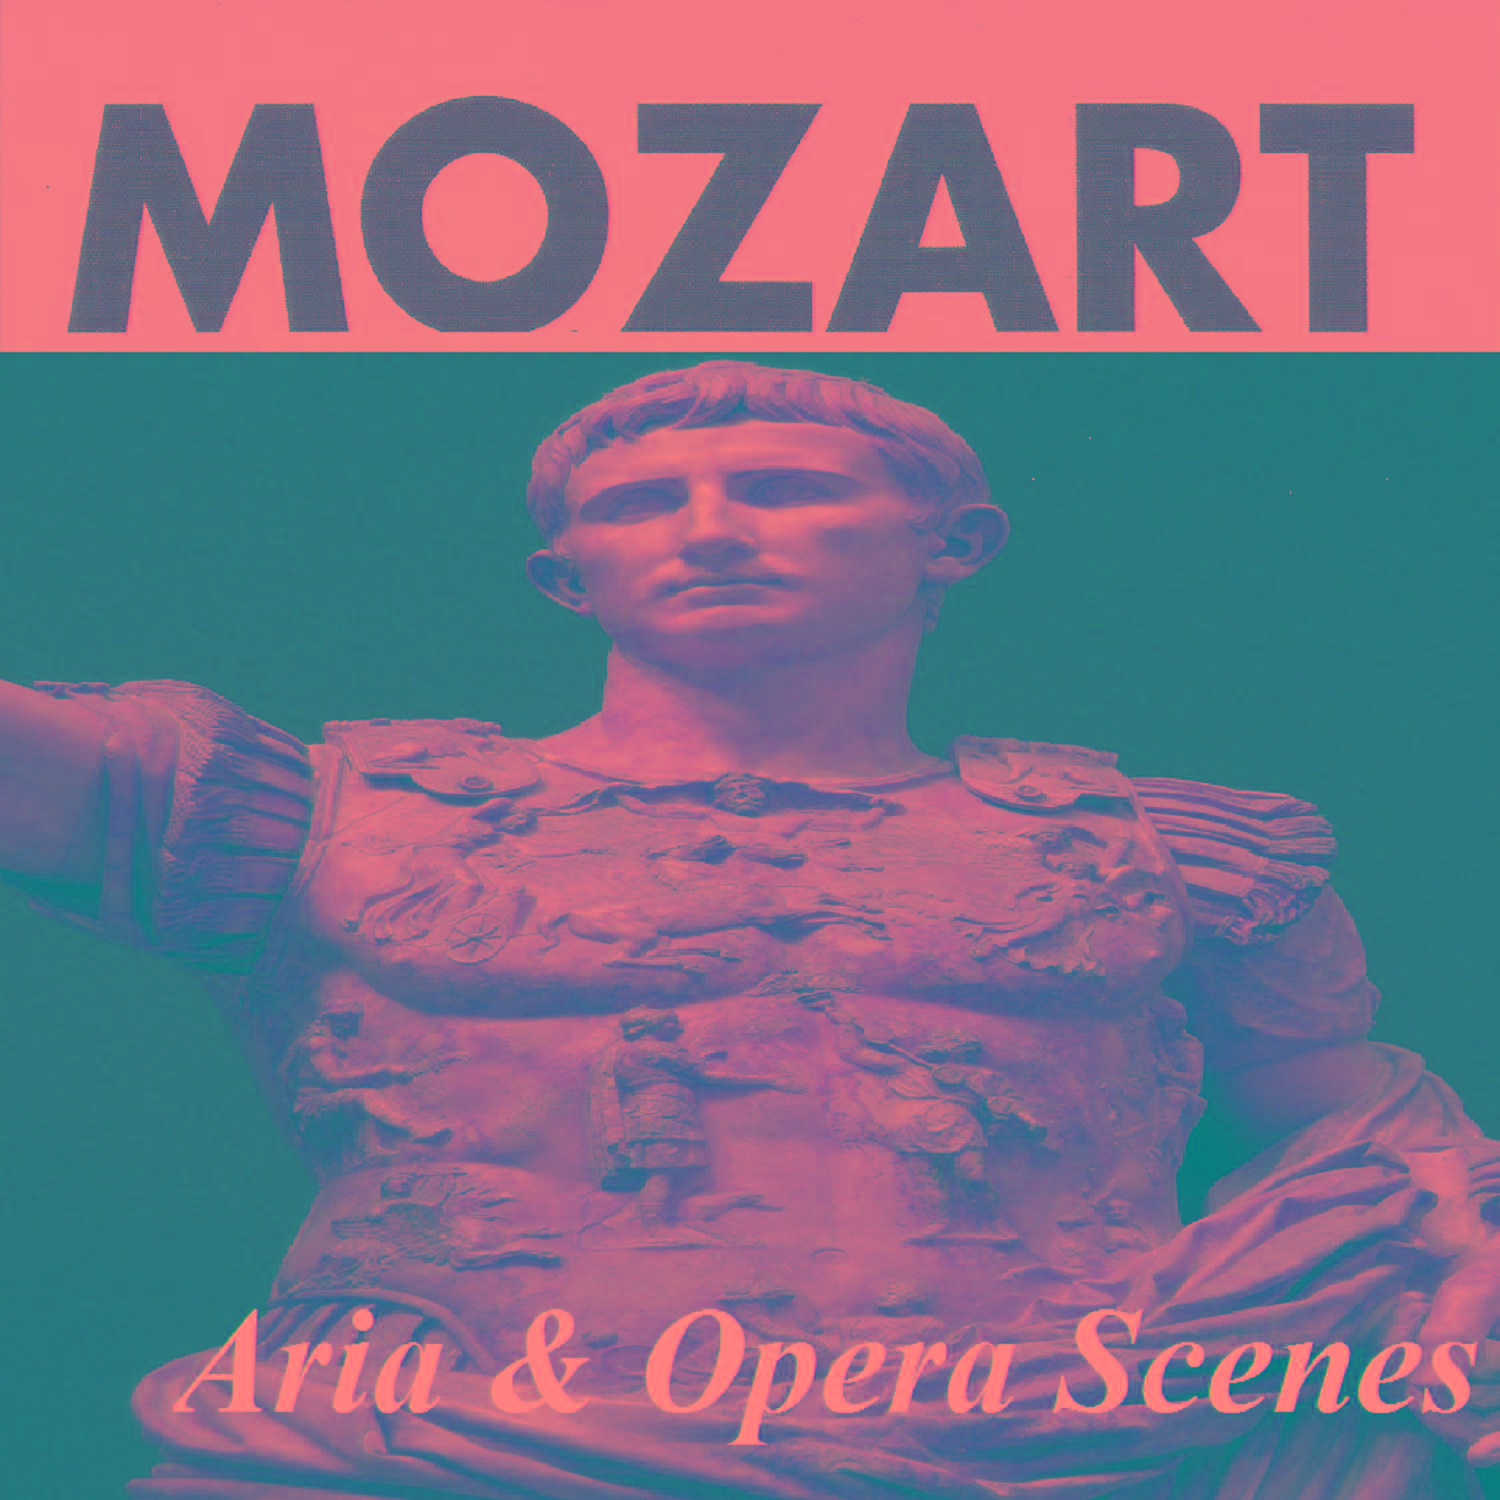 Wolfgang Amadeus Mozart - Die Zauberflöte, K. 620, Act I: 